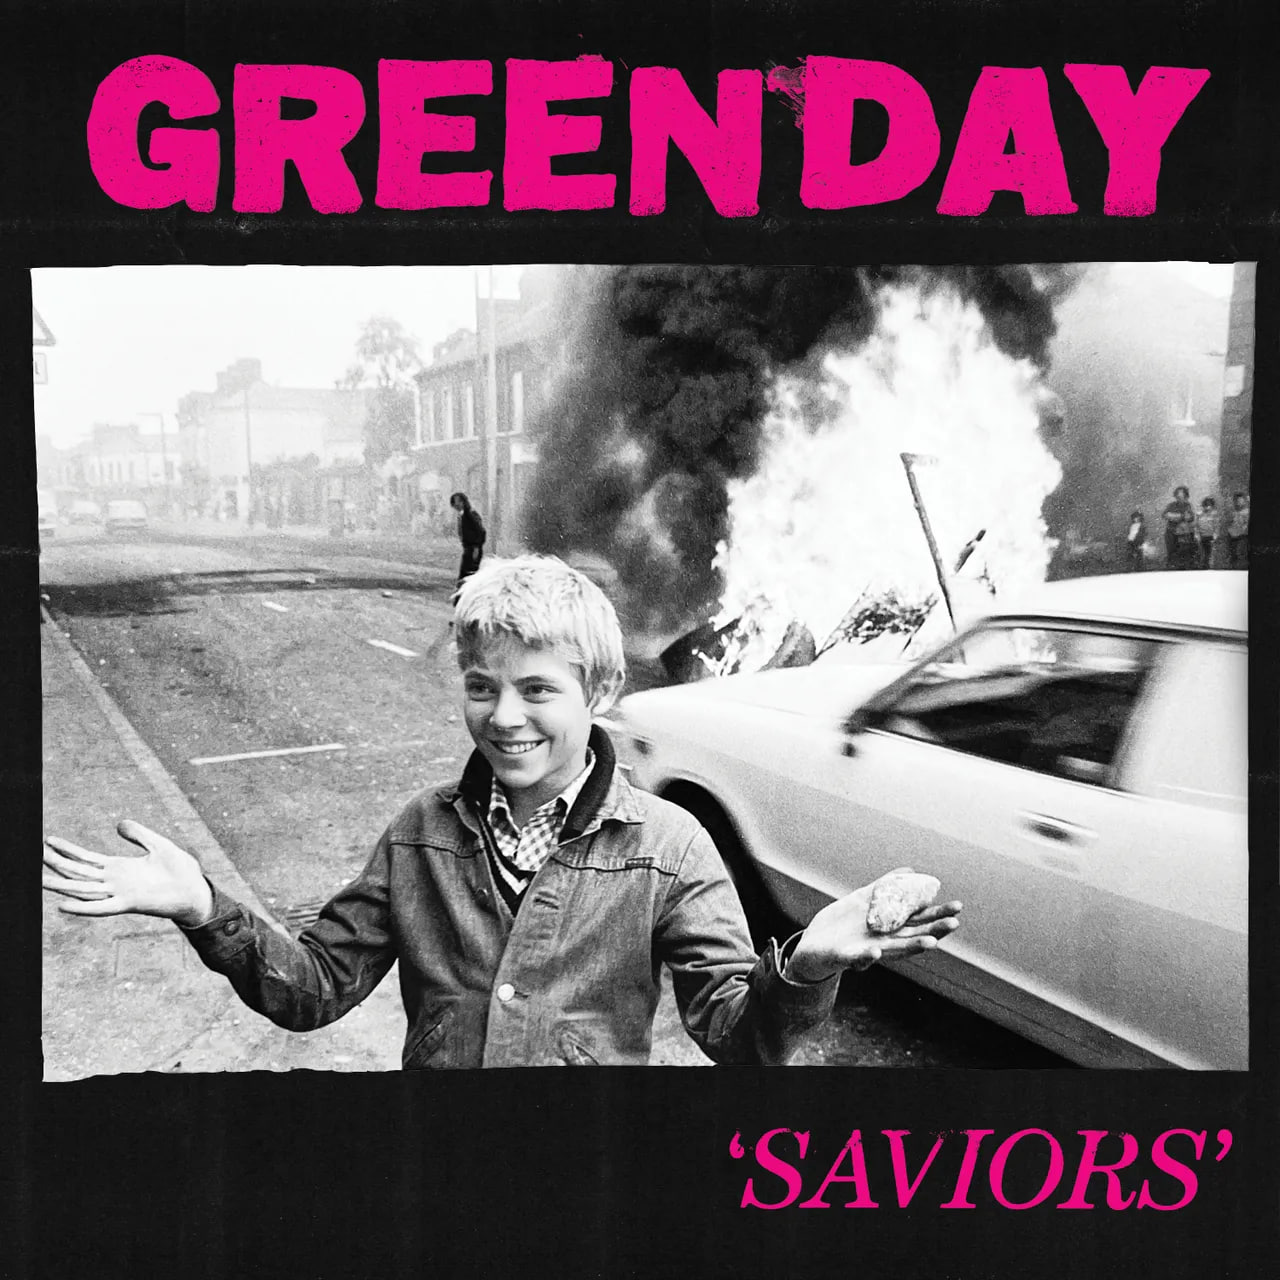 Рок Warner Music Green Day - Saviors (Limited Edition Magenta & Black Vinyl LP) электроника panorama records iowa лучшие песни trance magenta vinyl lp